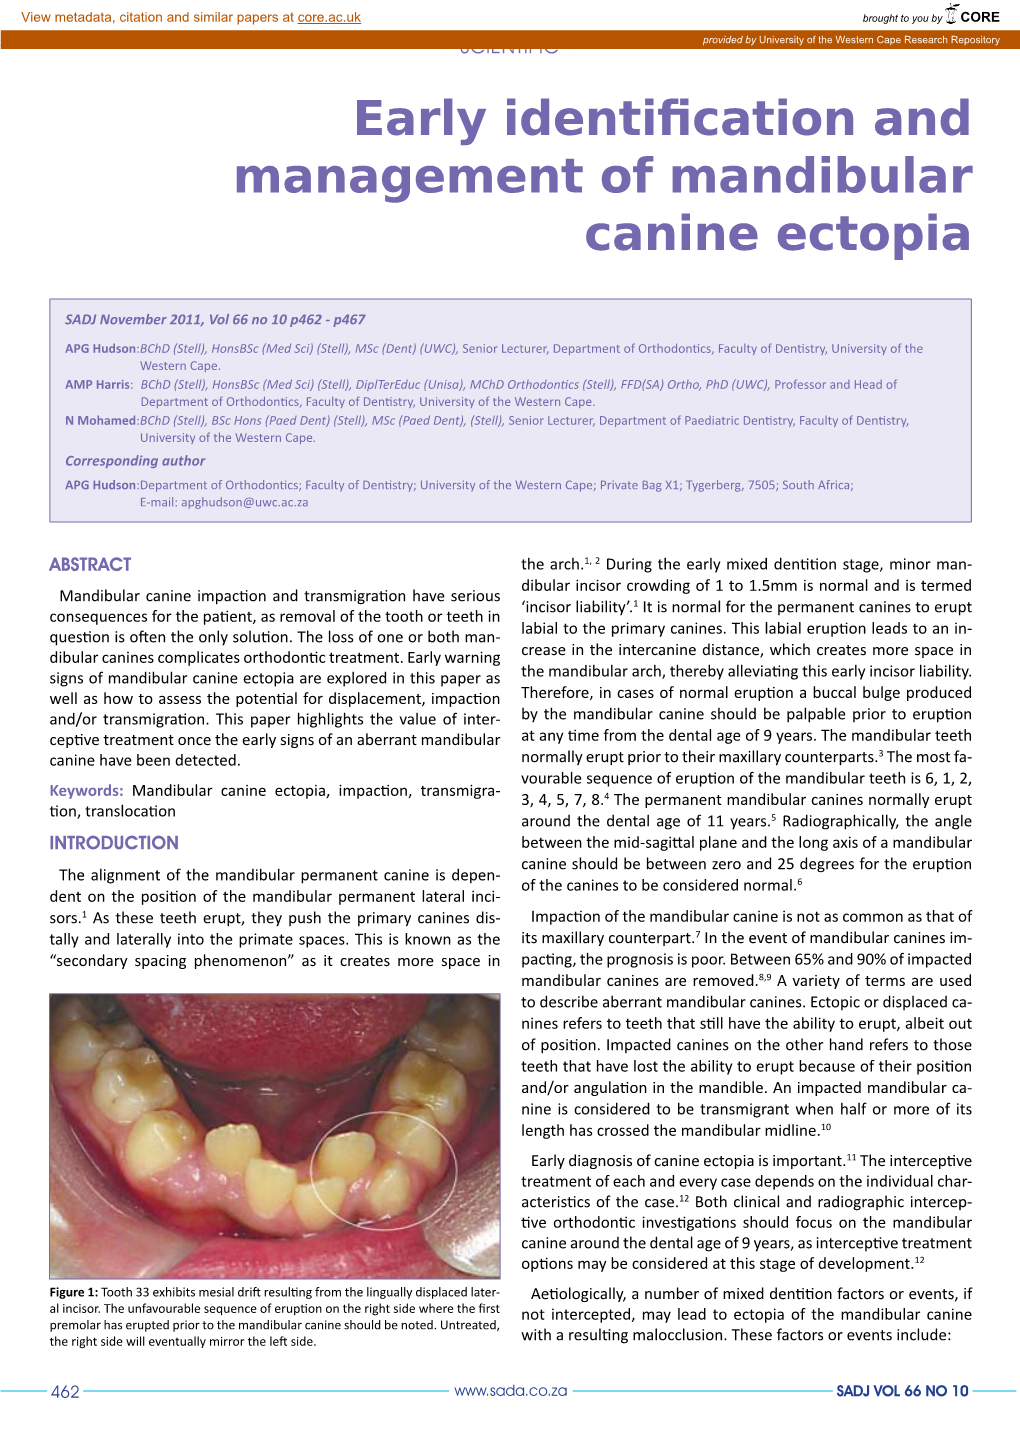 Early Identification and Management of Mandibular Canine Ectopia